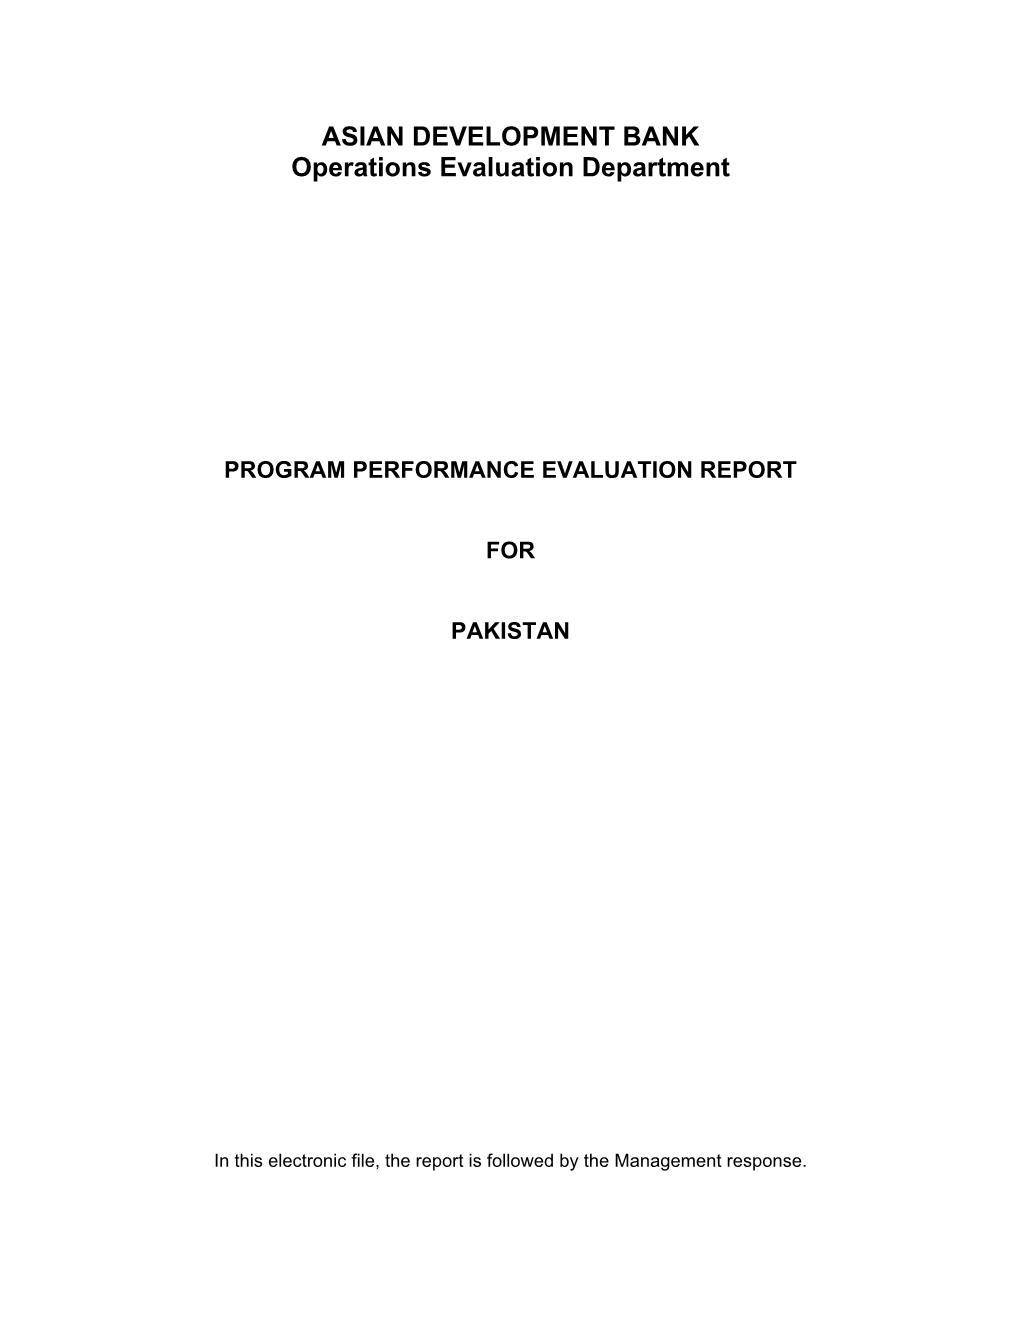 Program Performance Evaluation Report: Capital Market Development Program in Pakistan